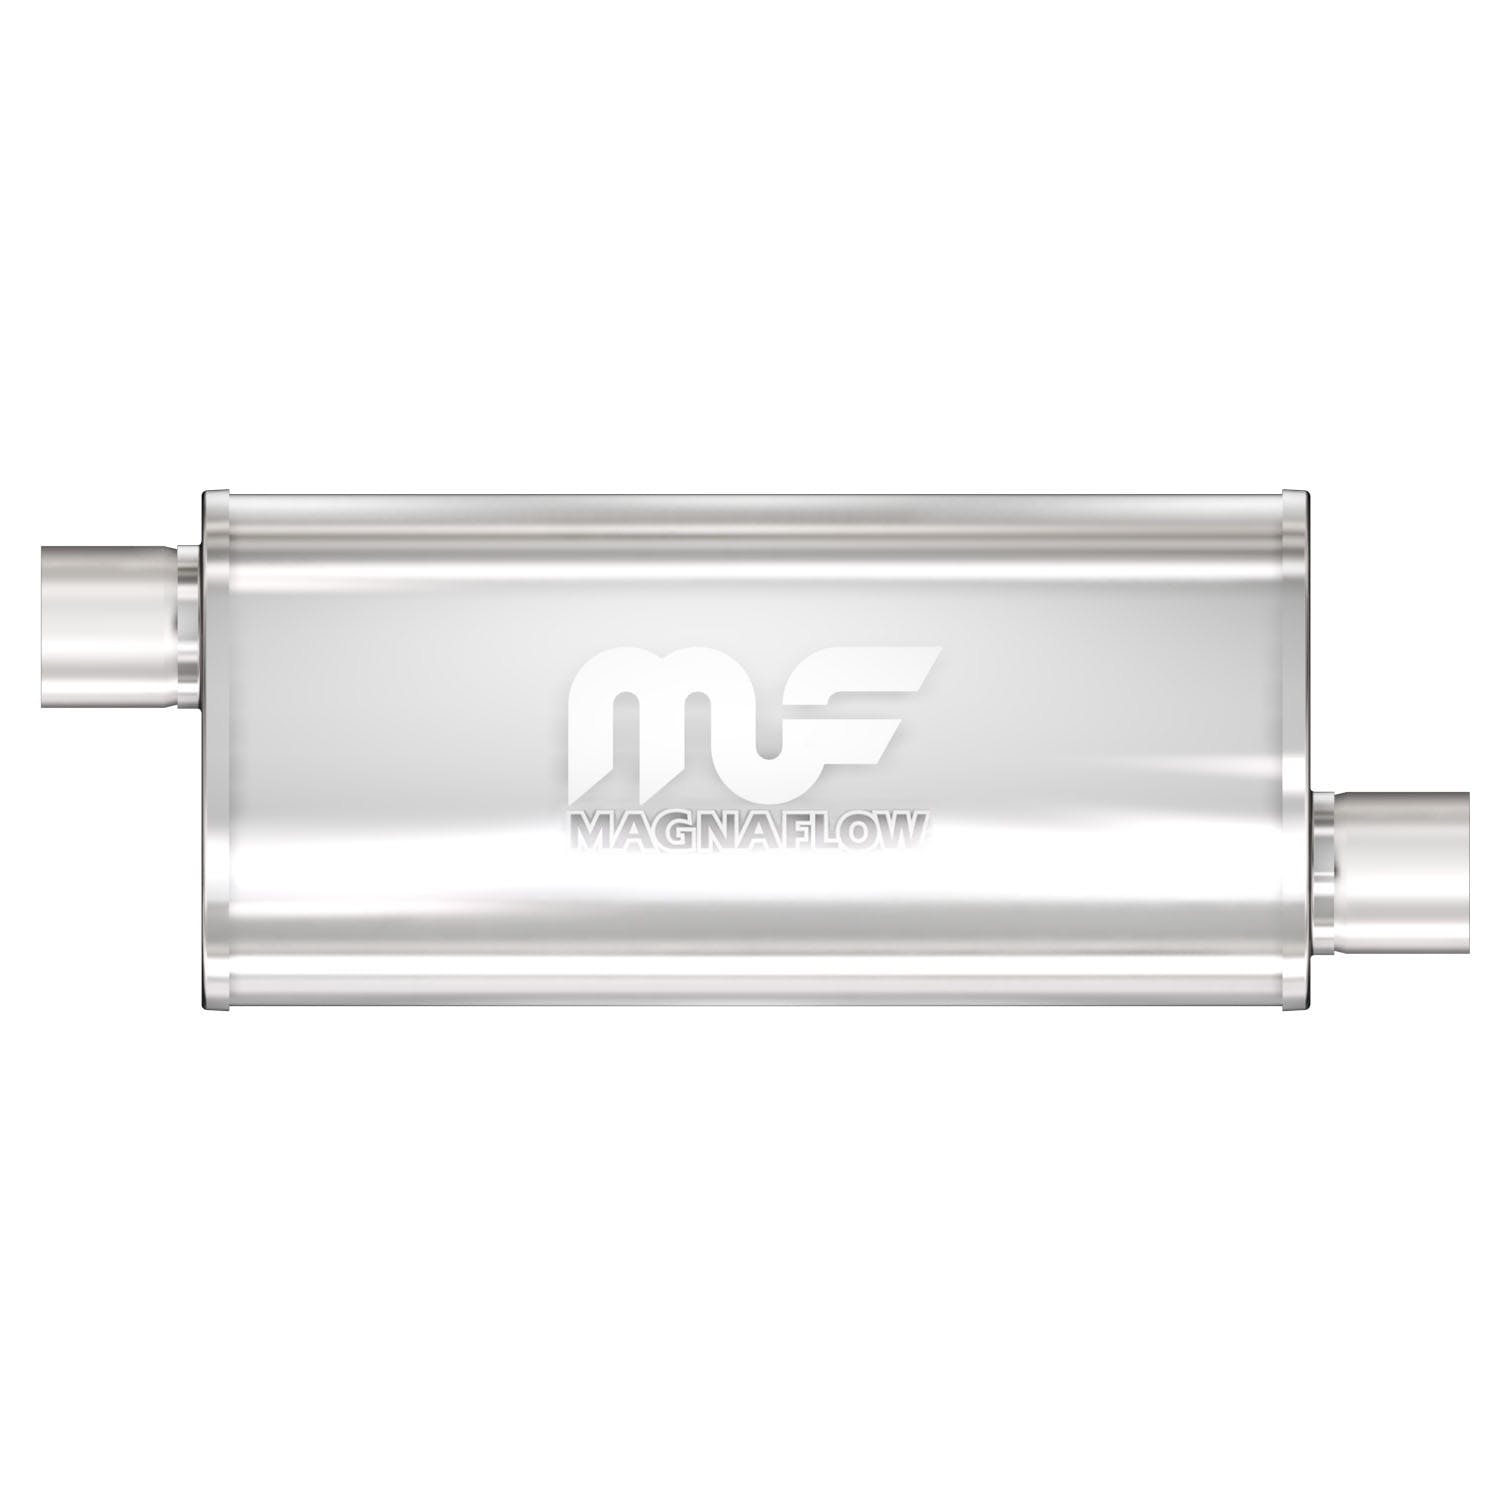 MagnaFlow Exhaust Products 14239 Universal Muffler